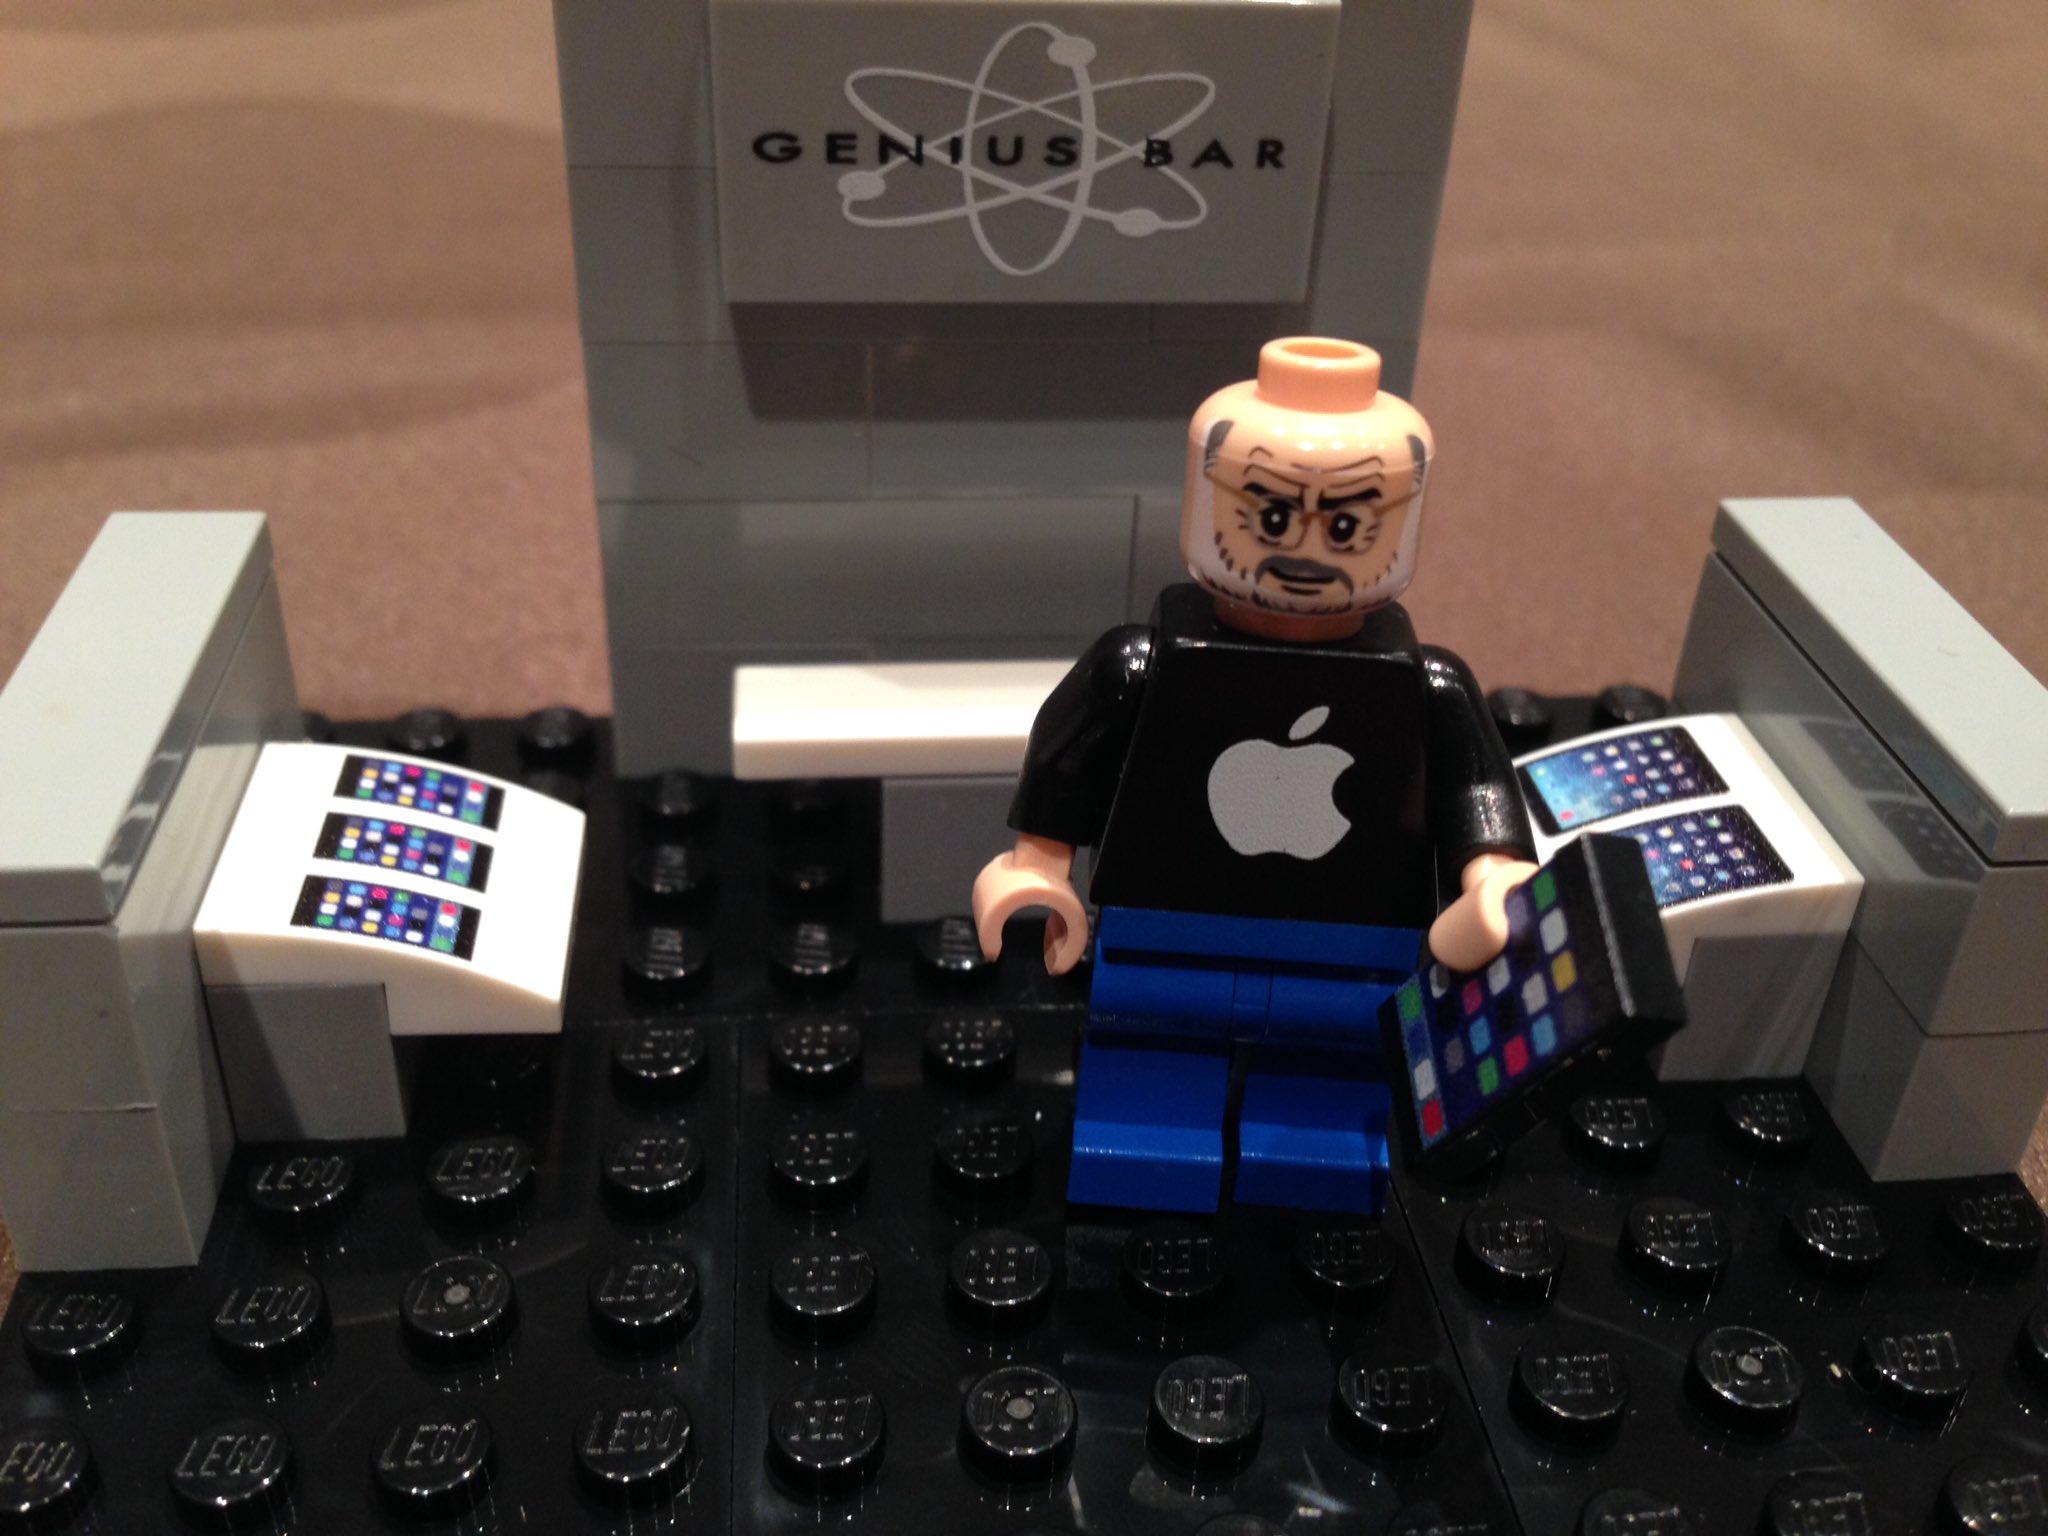 Minifigures Display on Twitter: "Fantastic! @BrickBoxClub Apple Steve Jobs minifigure https://t.co/eILwBHcZms" / Twitter